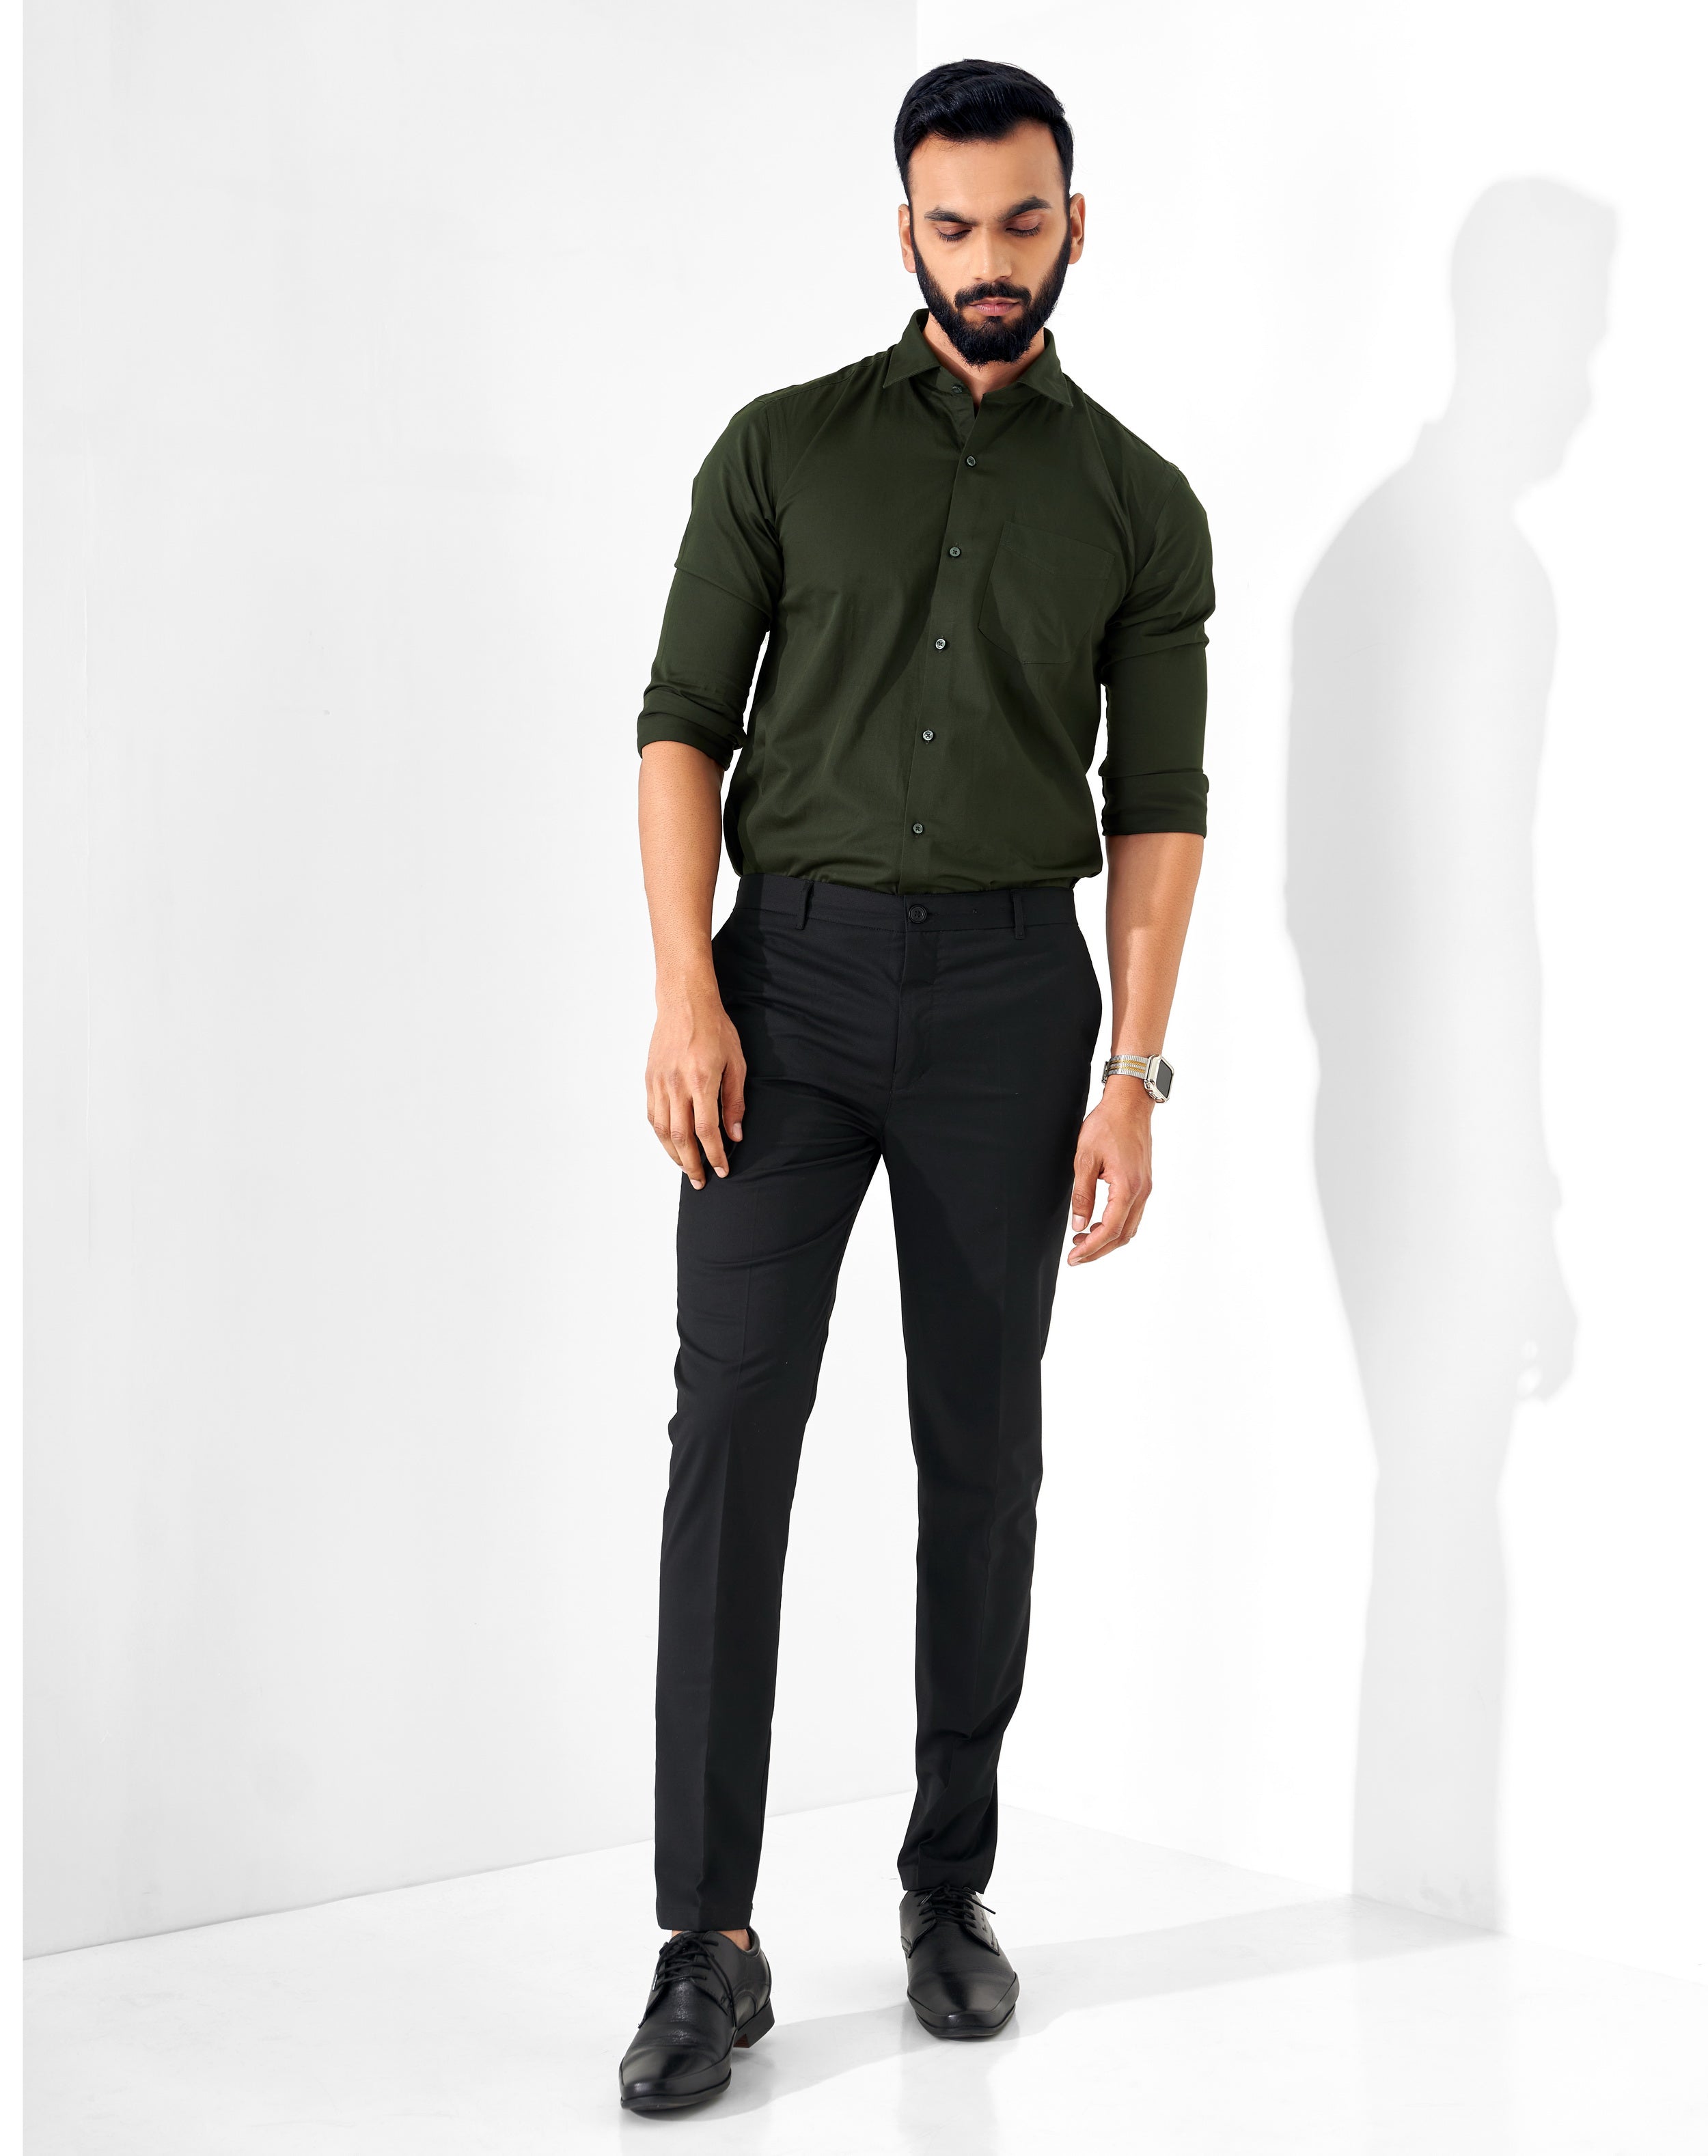 Green formal shirts for men at Rs 644.00 | Noida| ID: 2852452018530